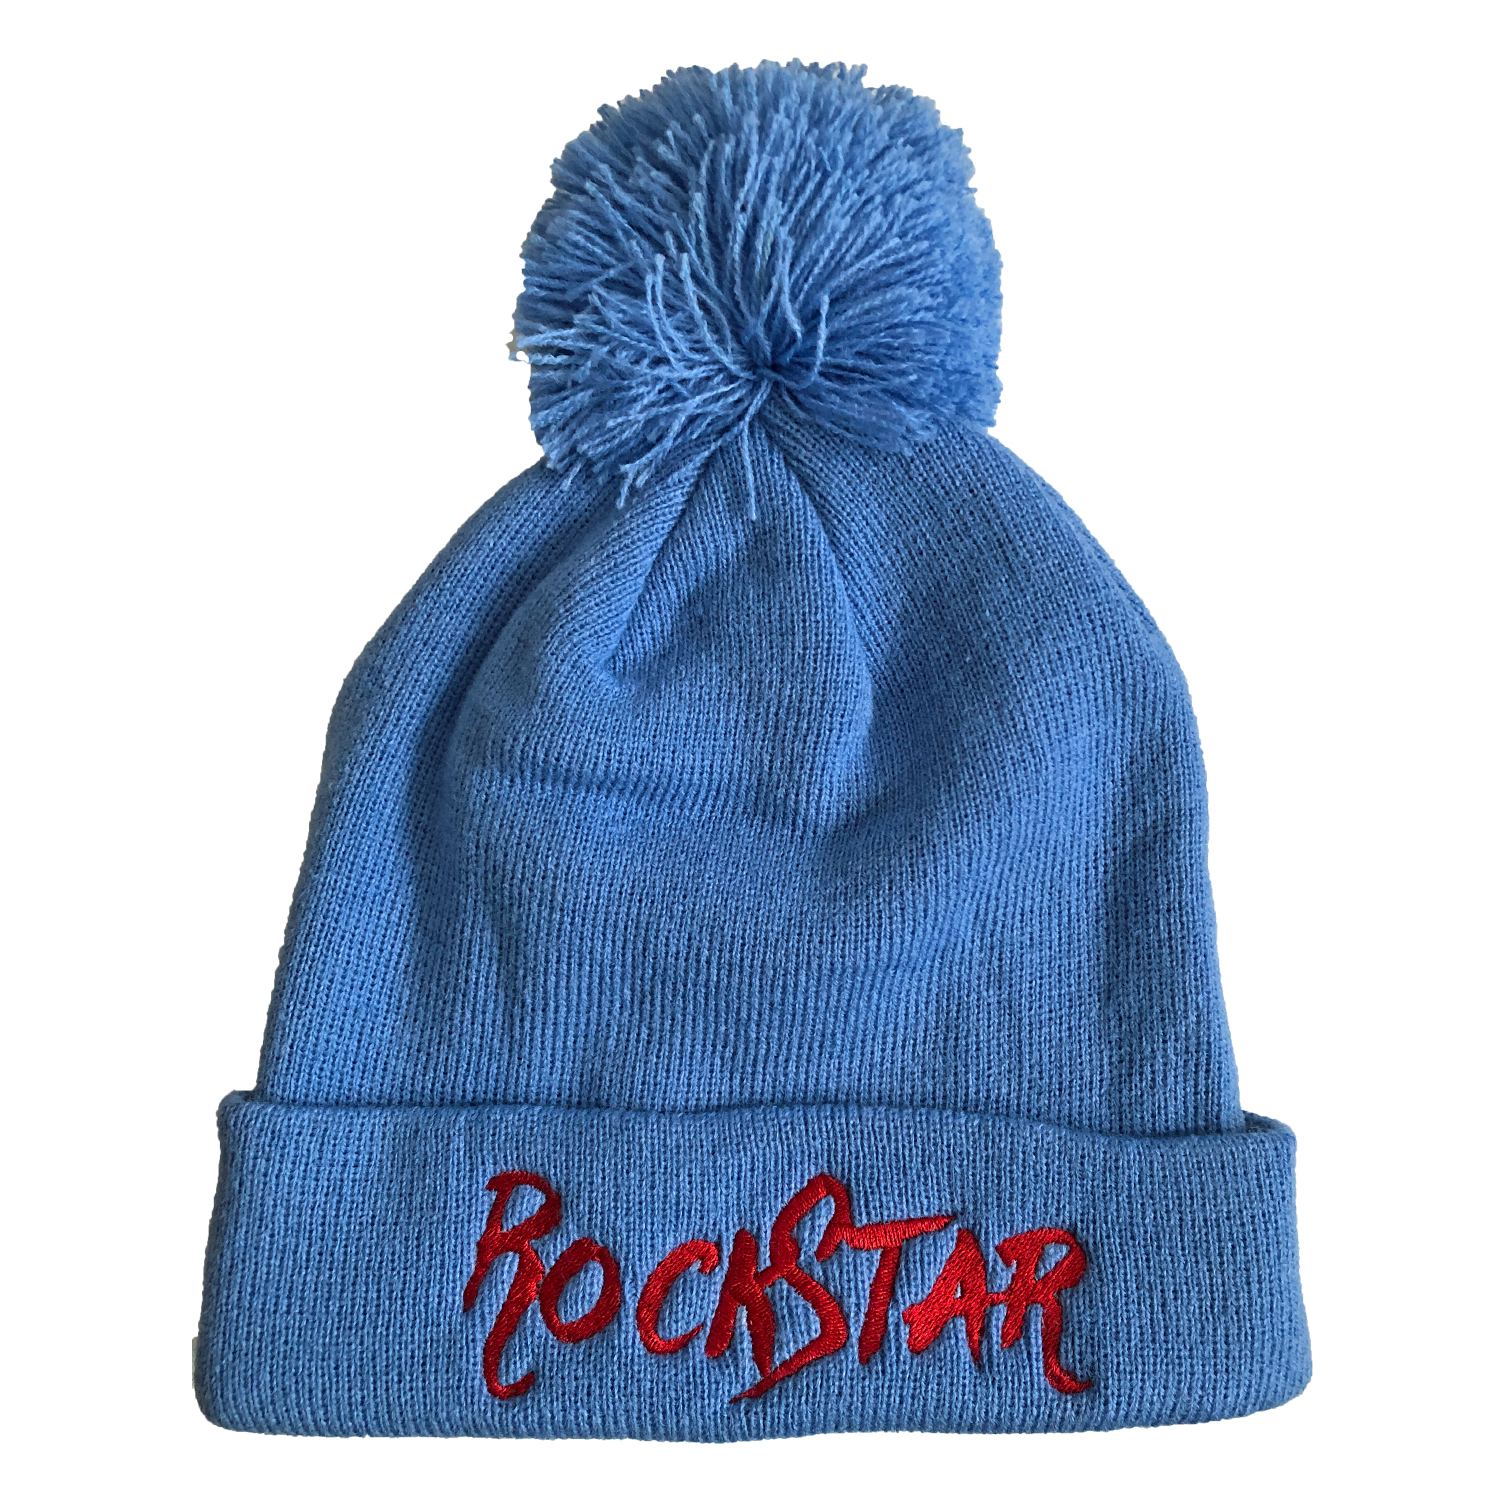 Beau Tyler - RockStar winter knit hat baby blue front - maybe temp